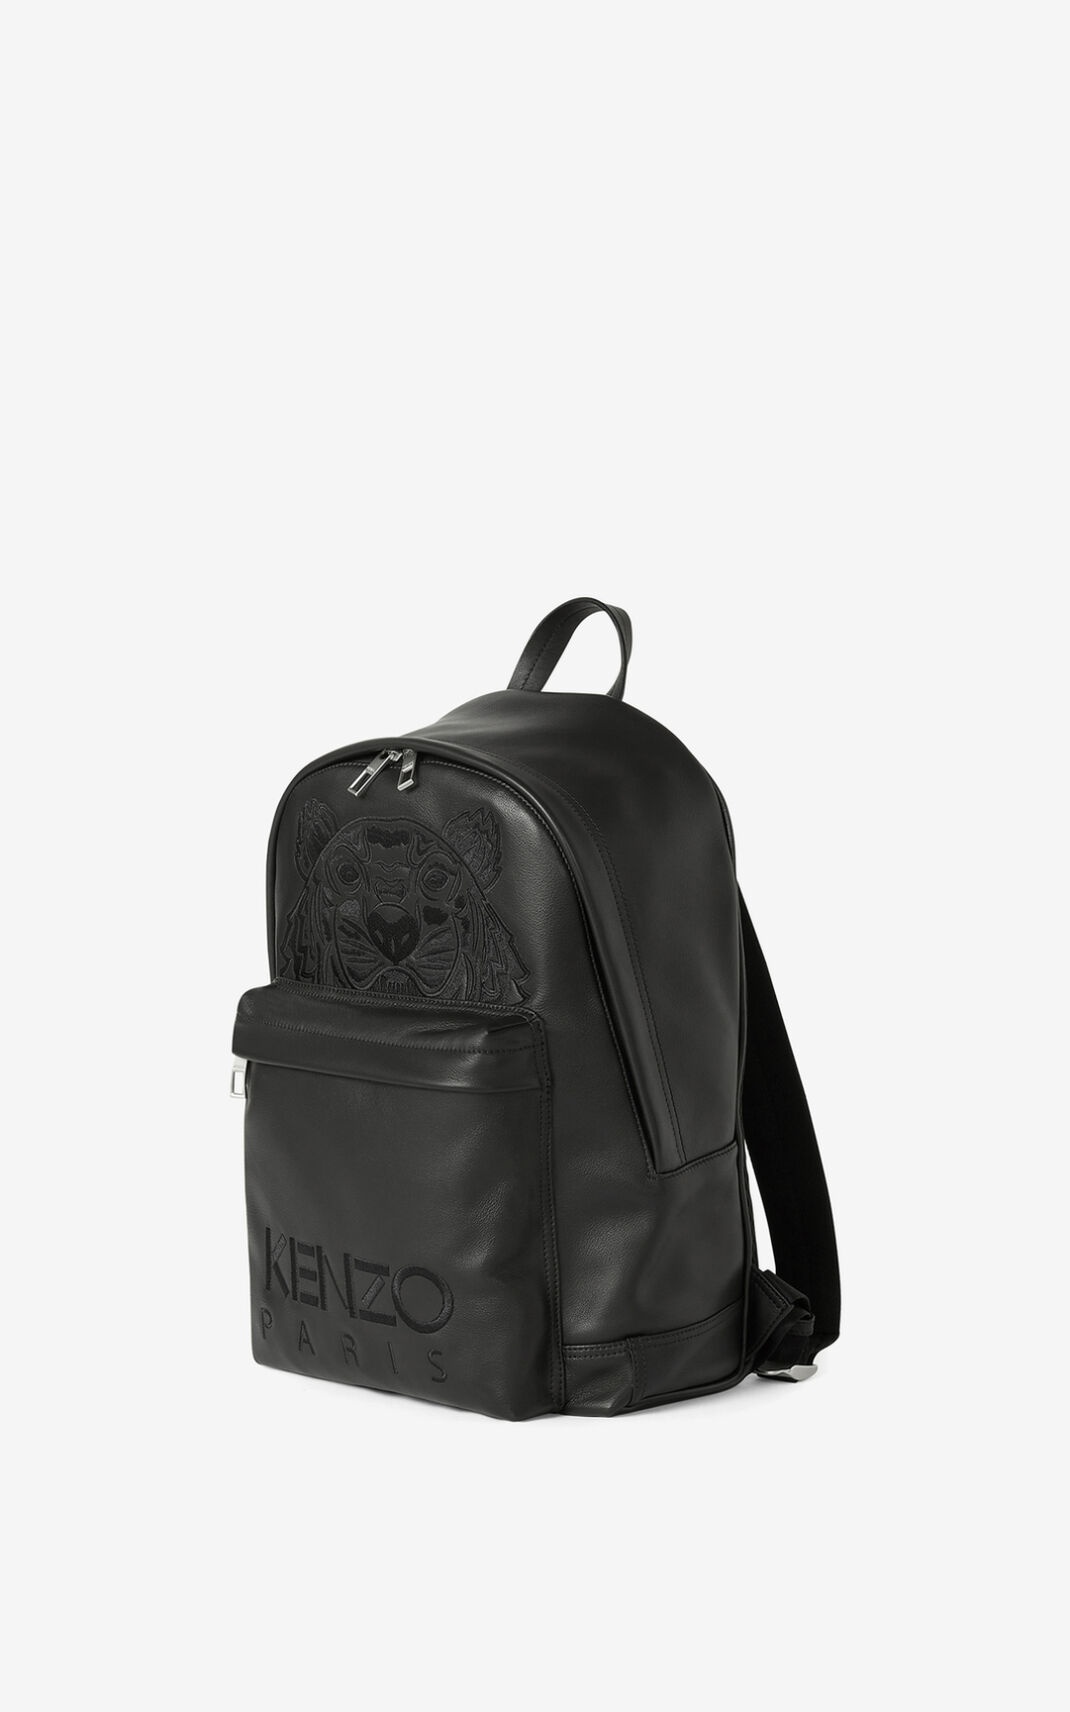 Tiger leather backpack - 3